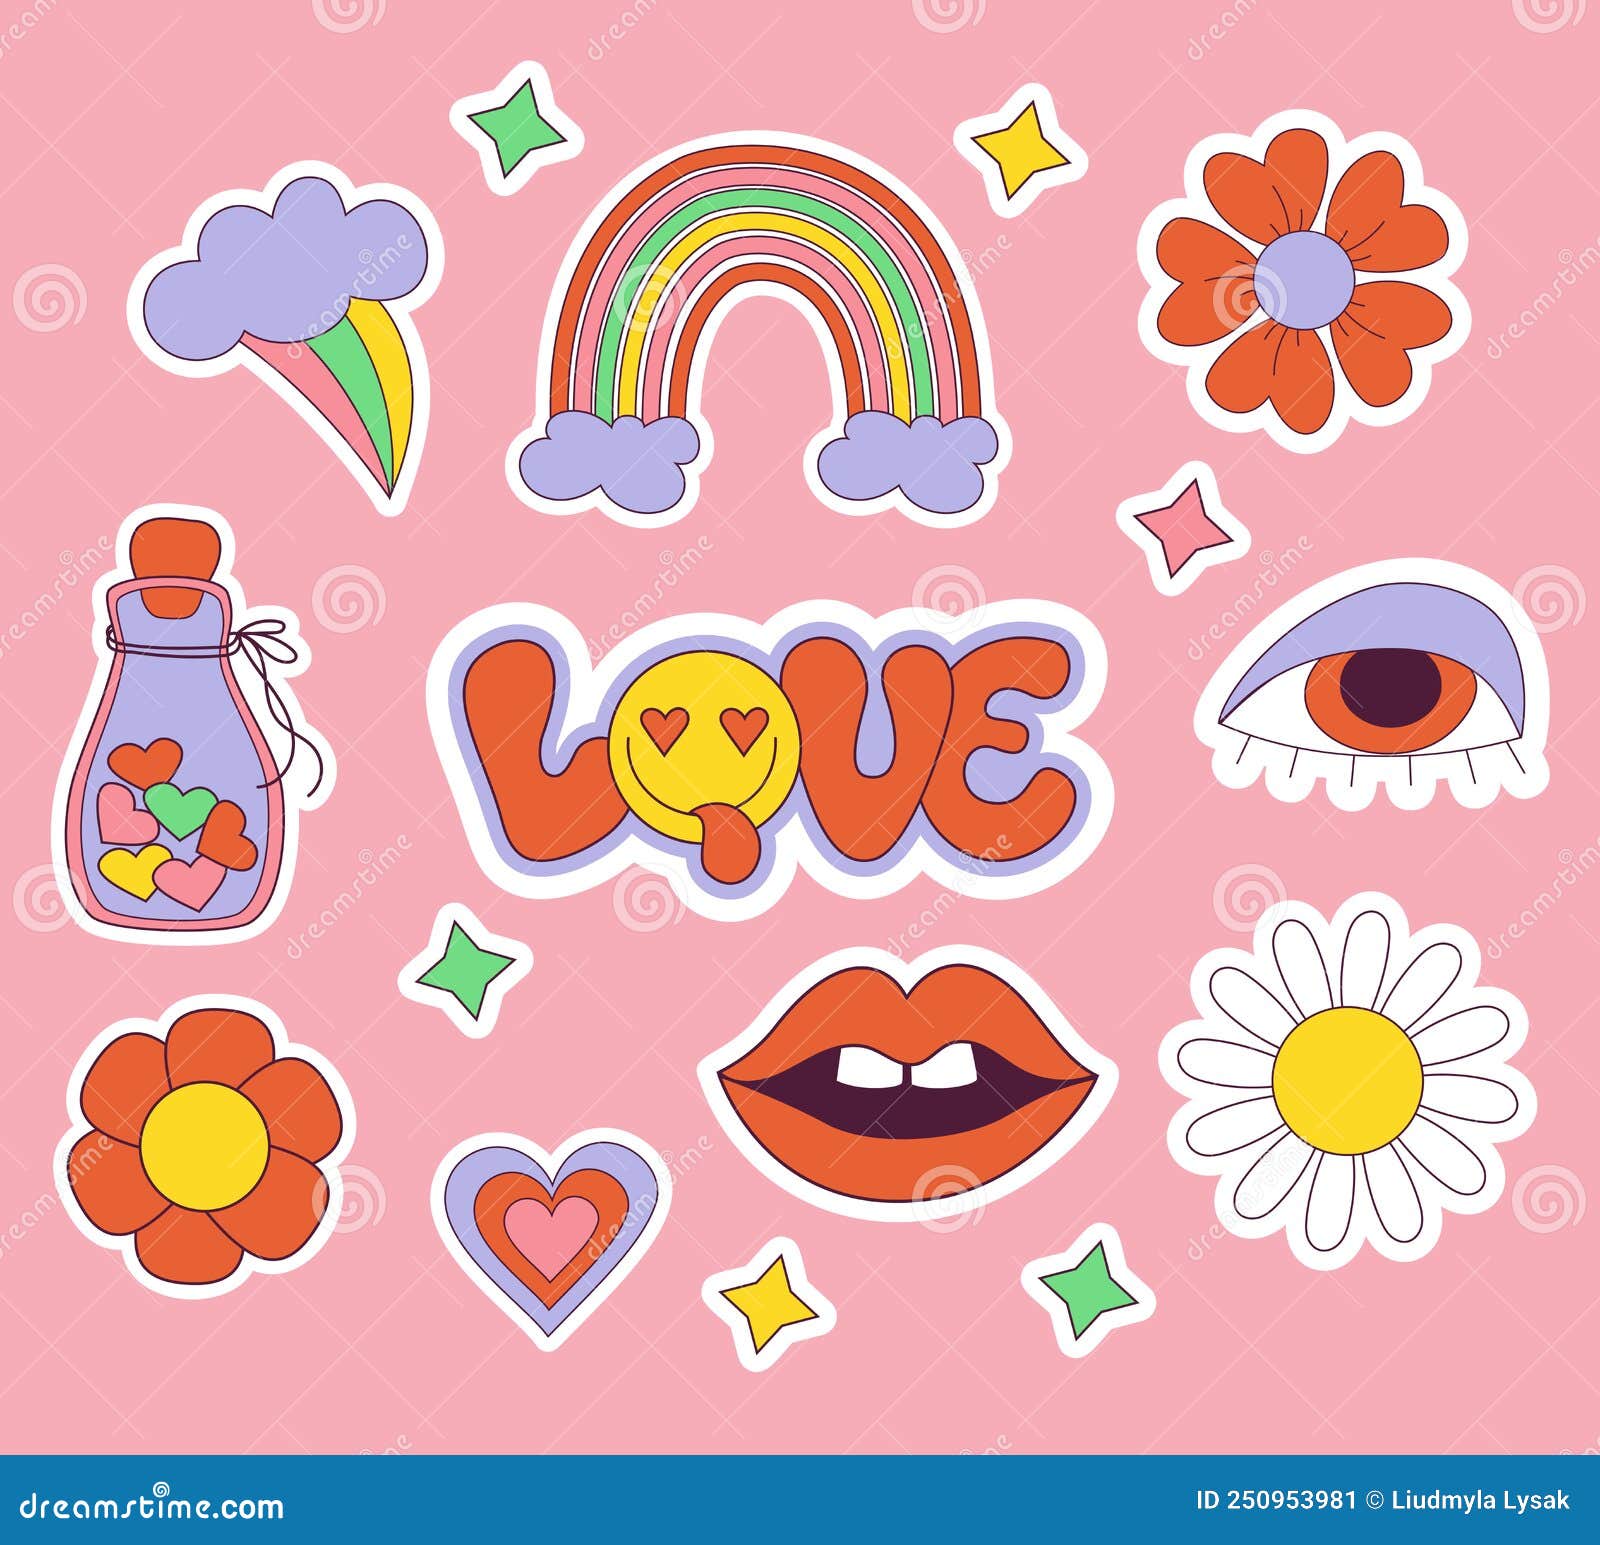 Premium Vector  Set of colorful cute stickers